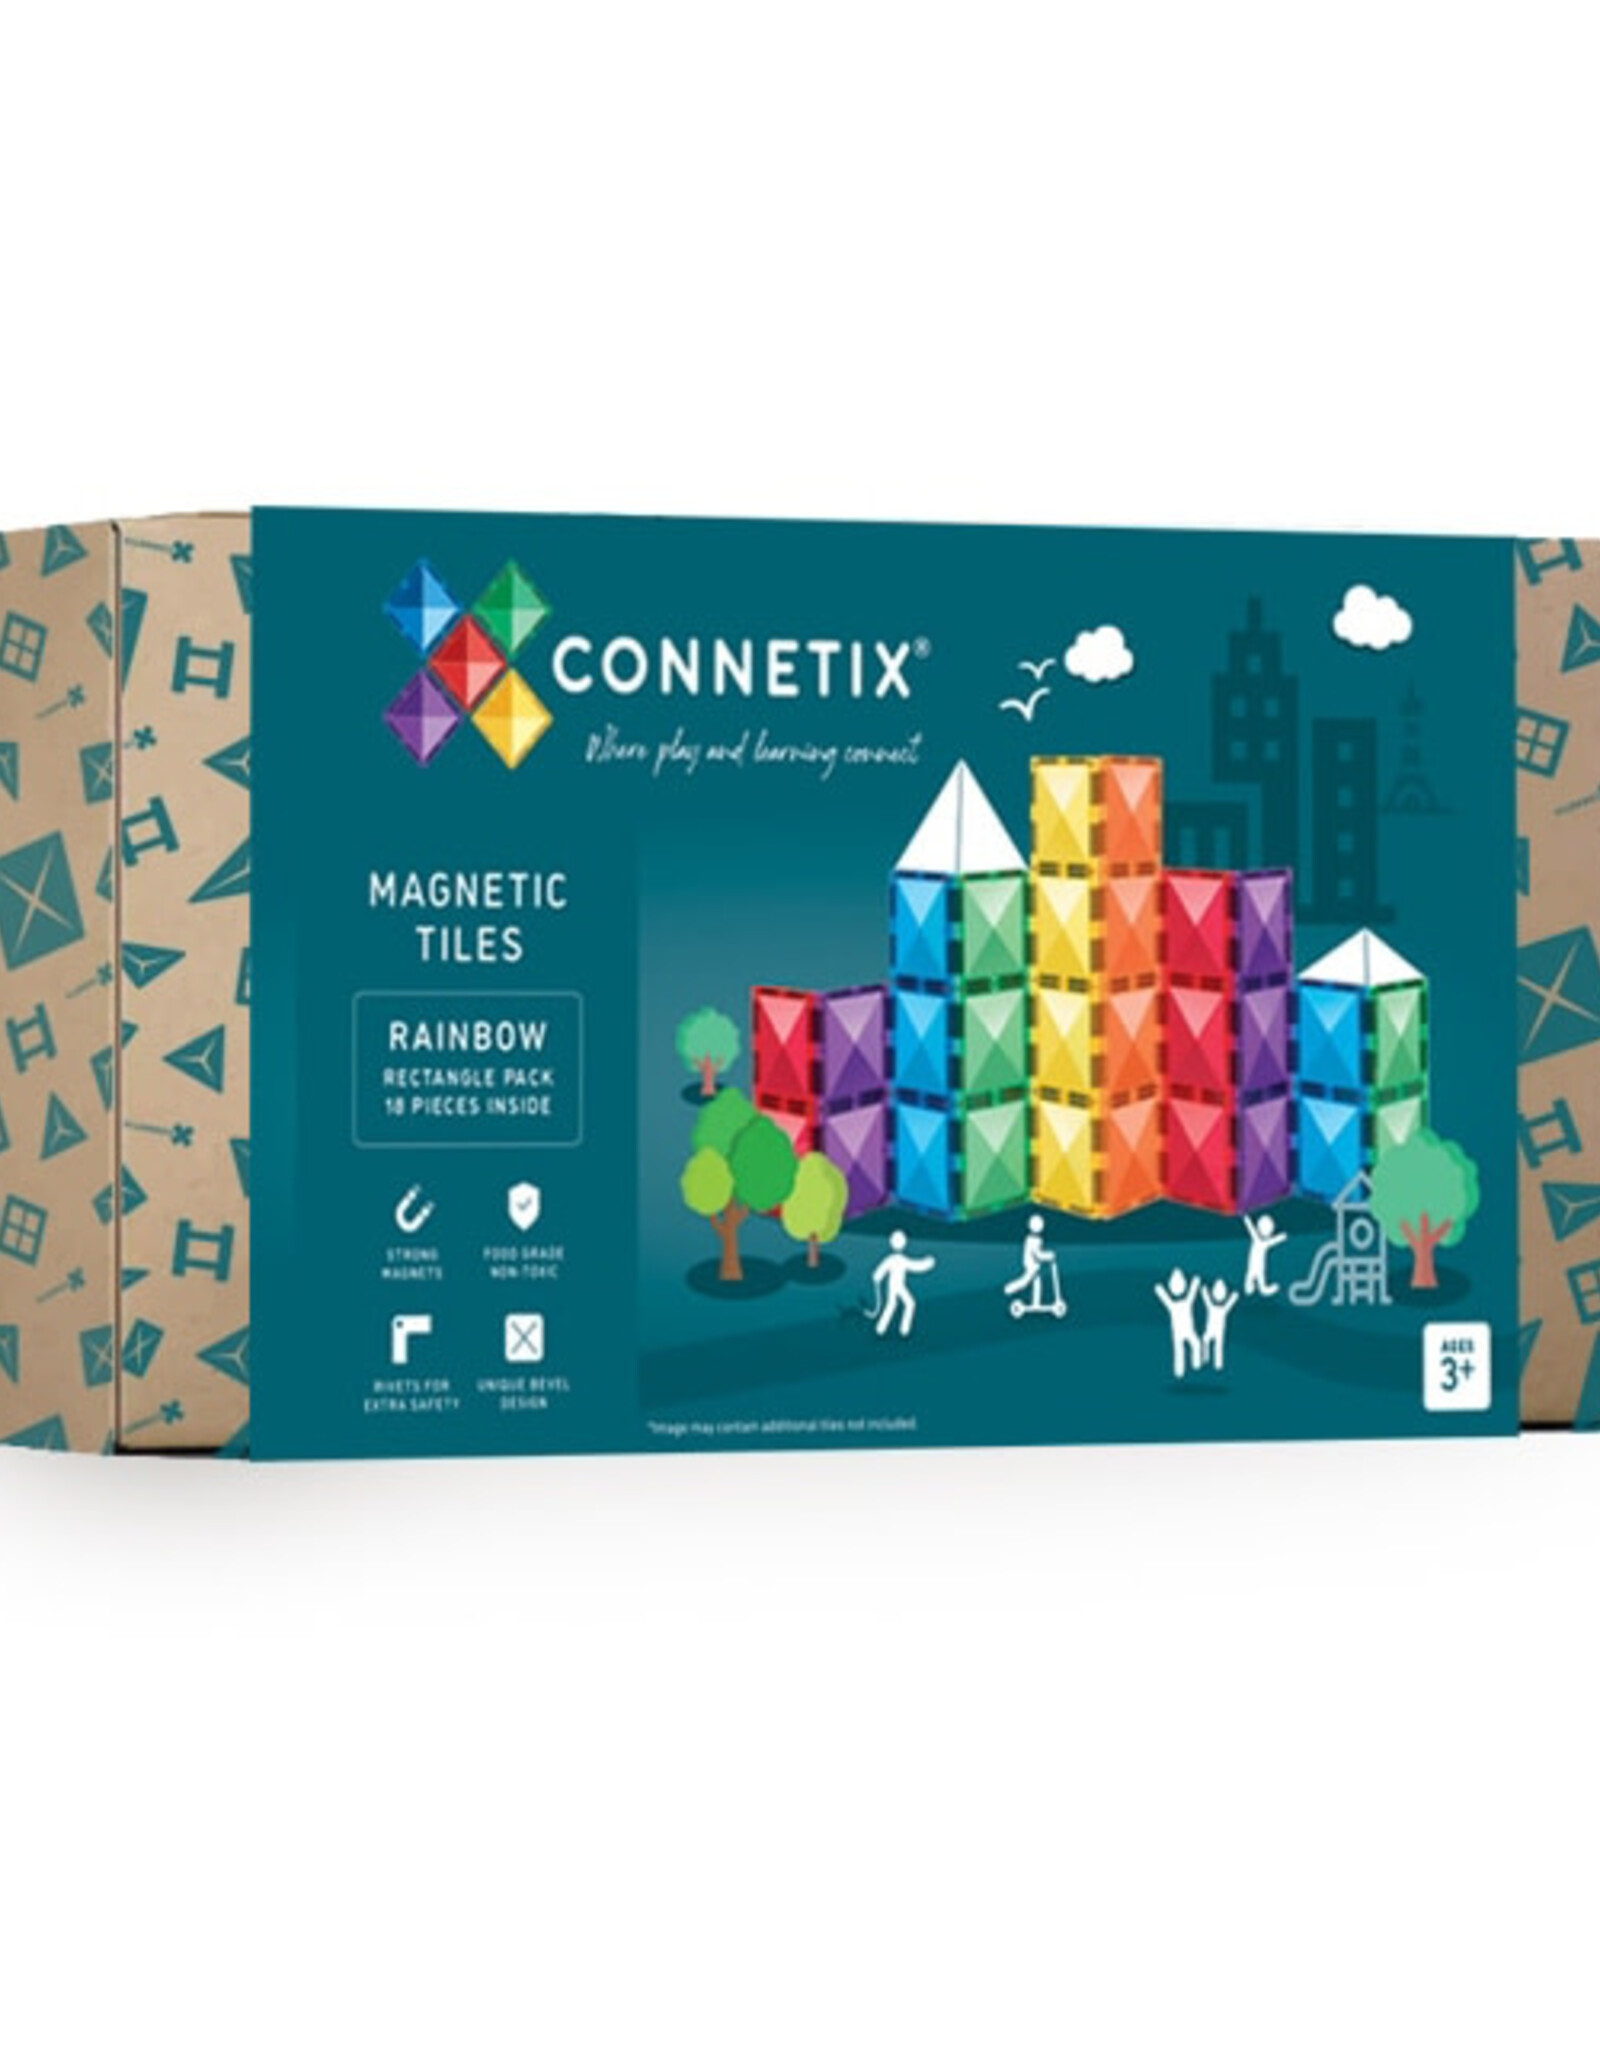 Connetix Rainbow Rectangle Pack 18 pc